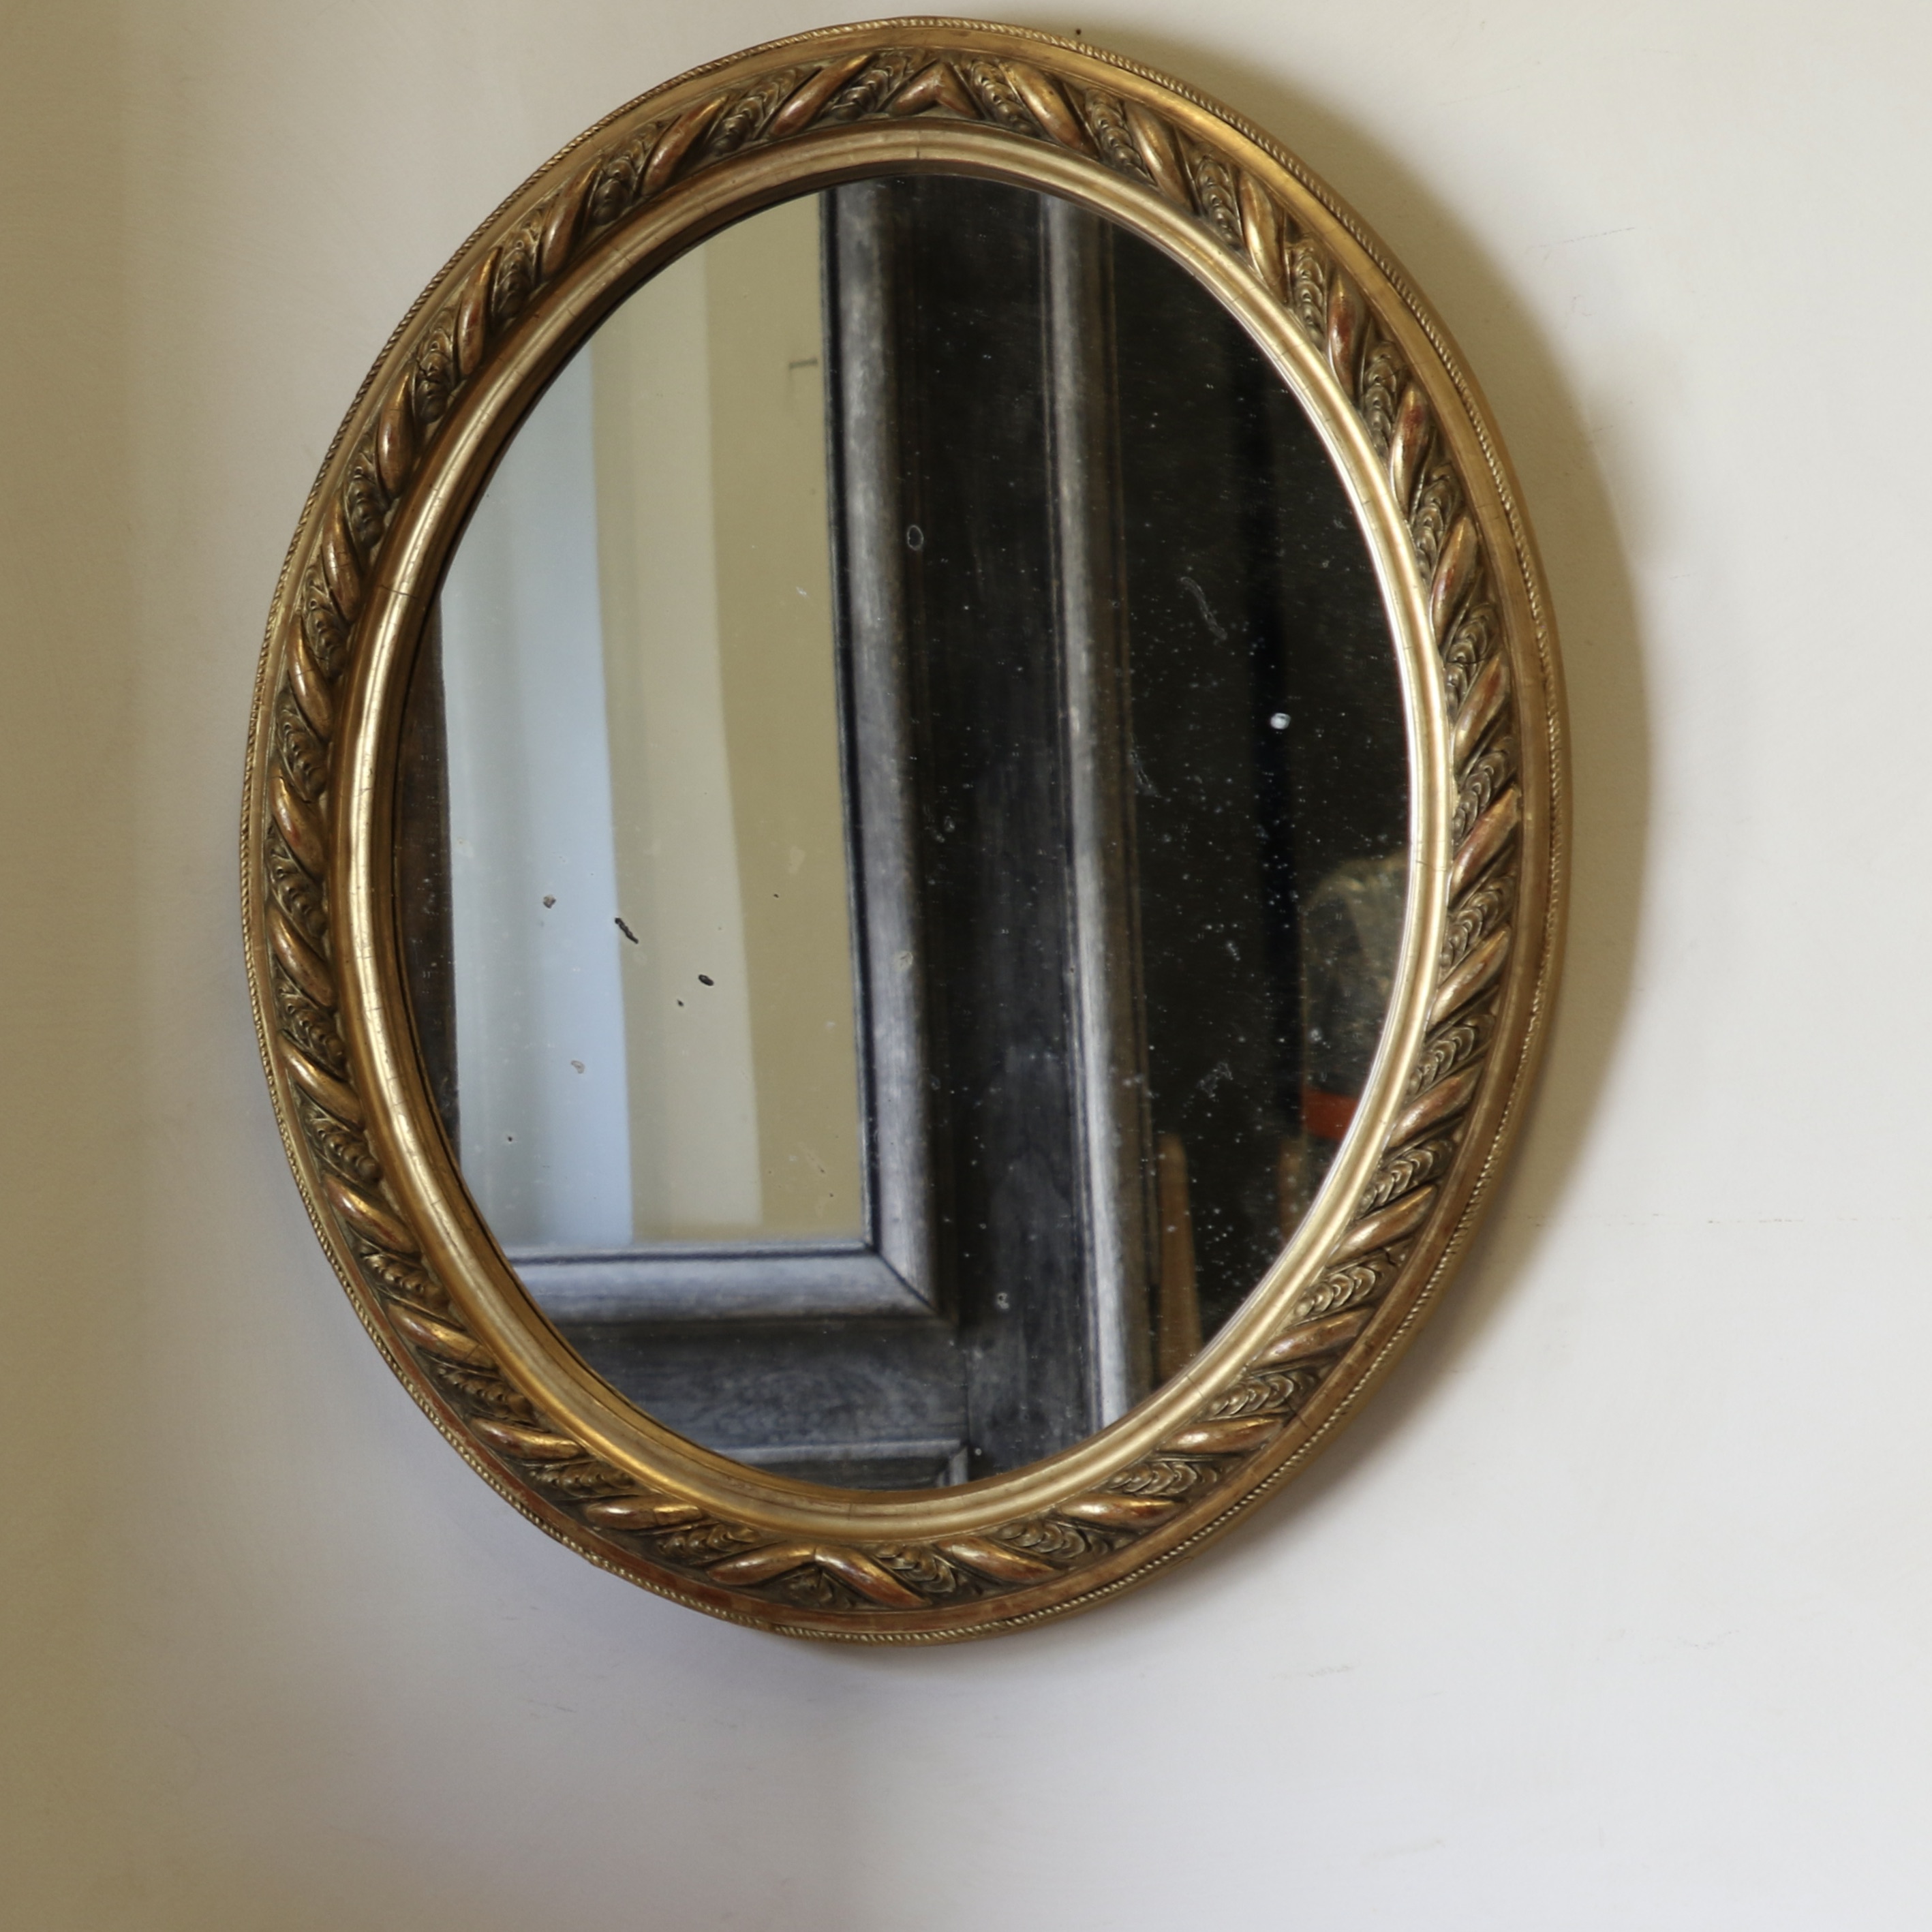 A Decorative French Gilt Oval Mirror